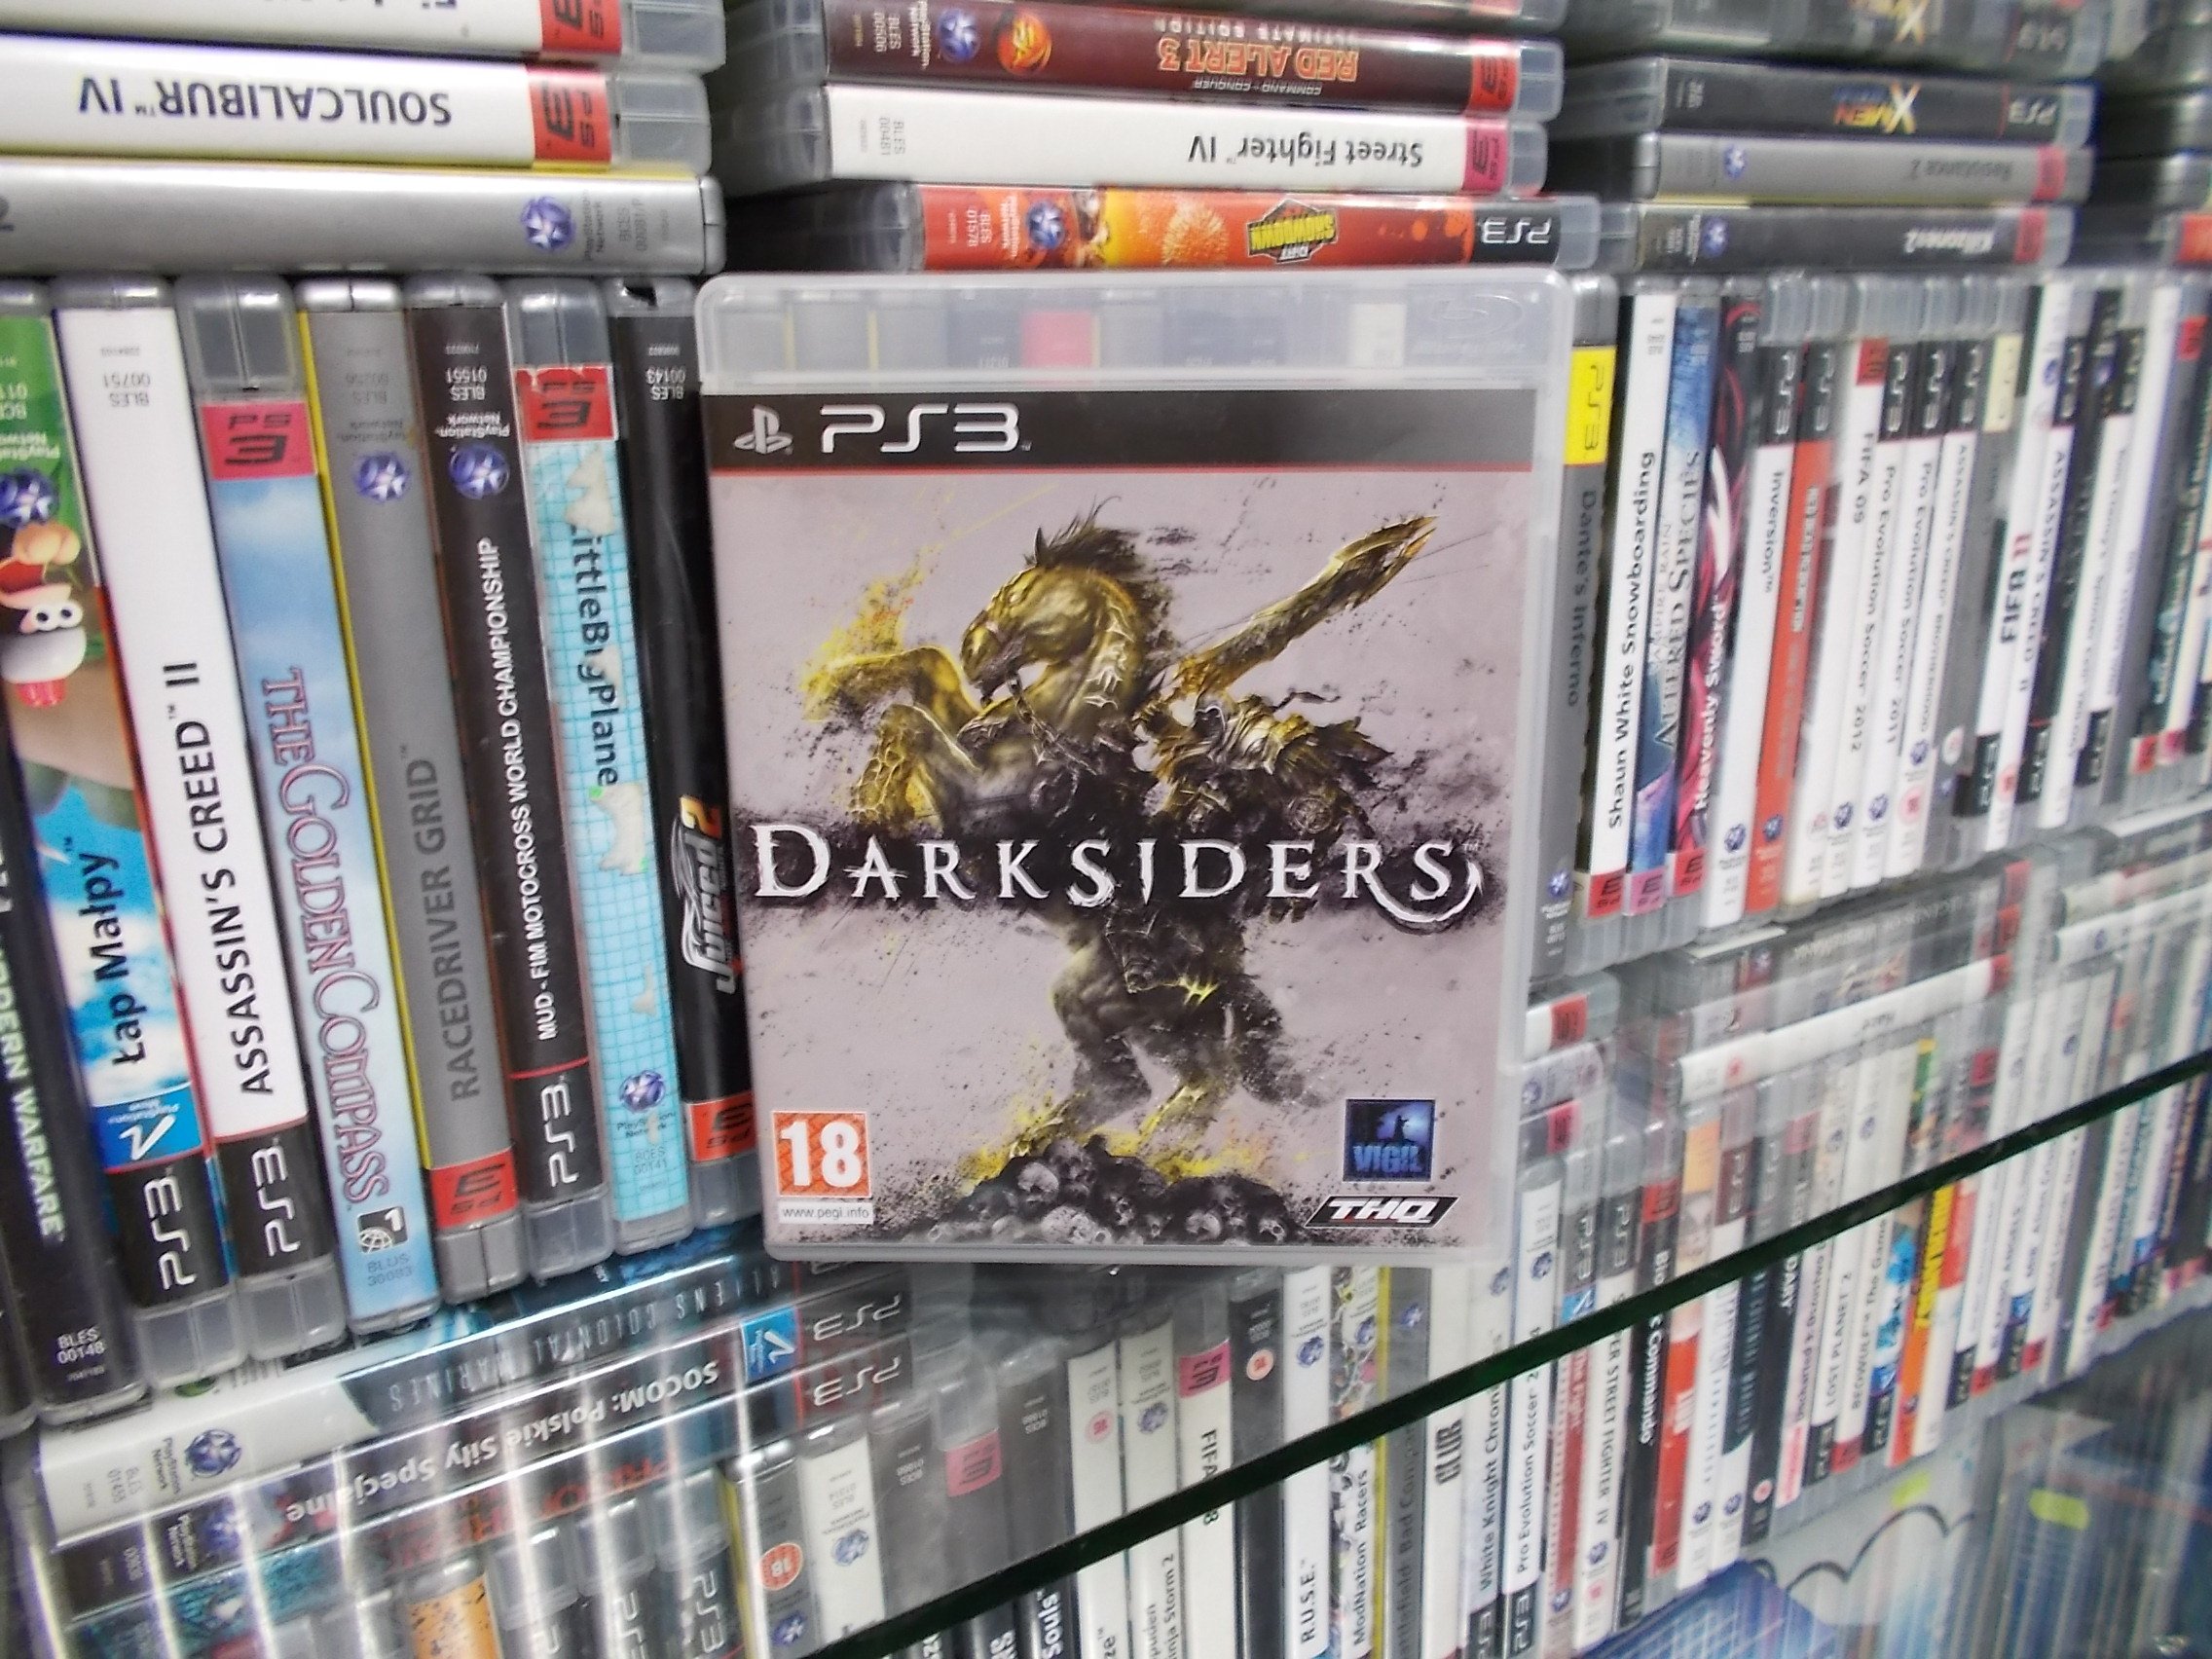 Darksiders - GRA PS3 - Opole 0016